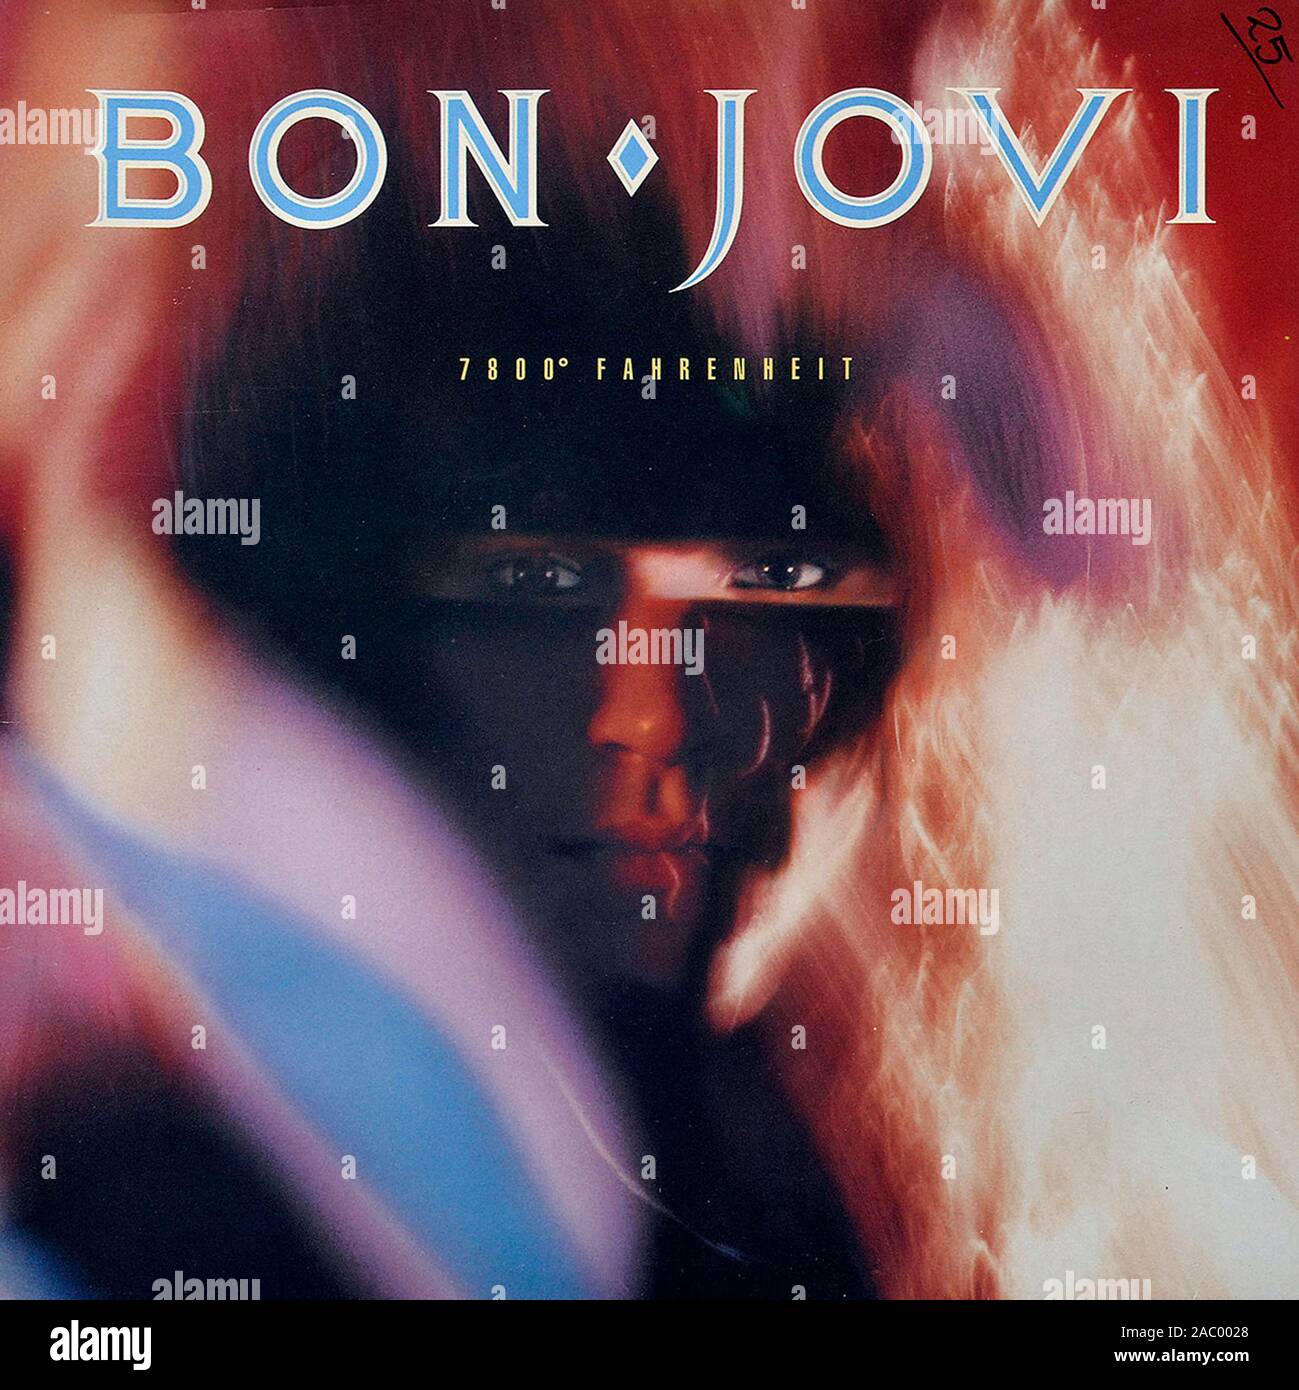 BON JOVI 7800° Fahrenheit - Vintage vinyl album cover Stock Photo - Alamy